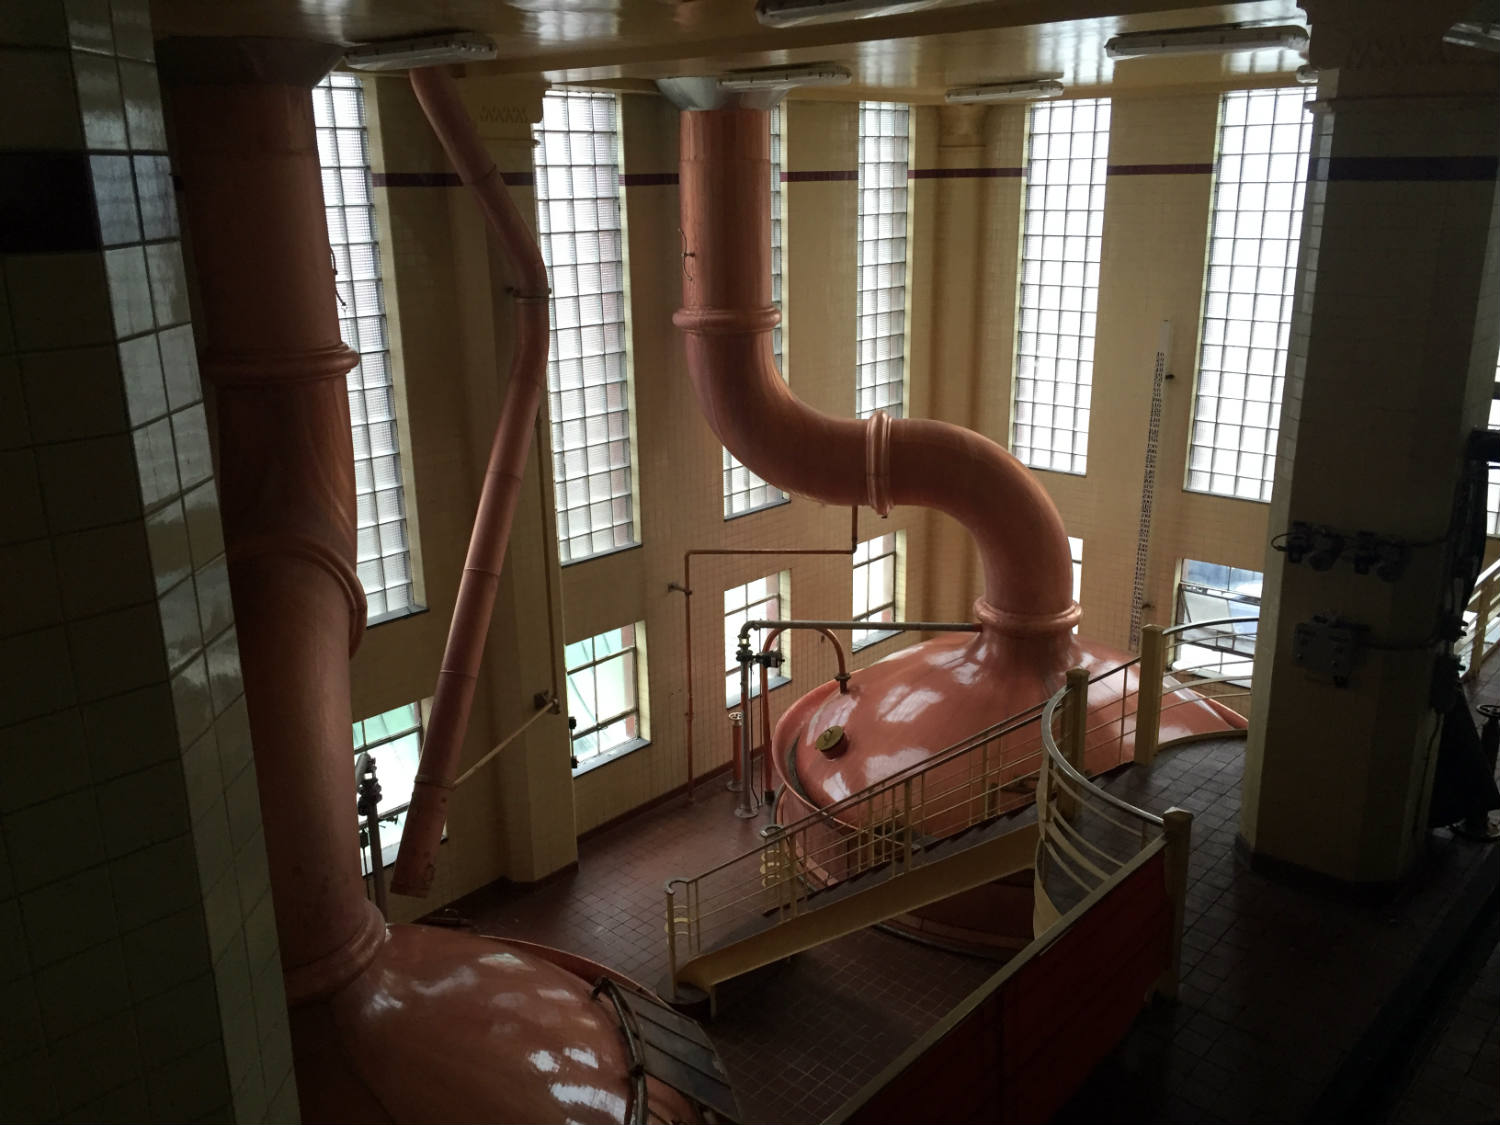 Inside the Saranac Brewery in Utica, New York